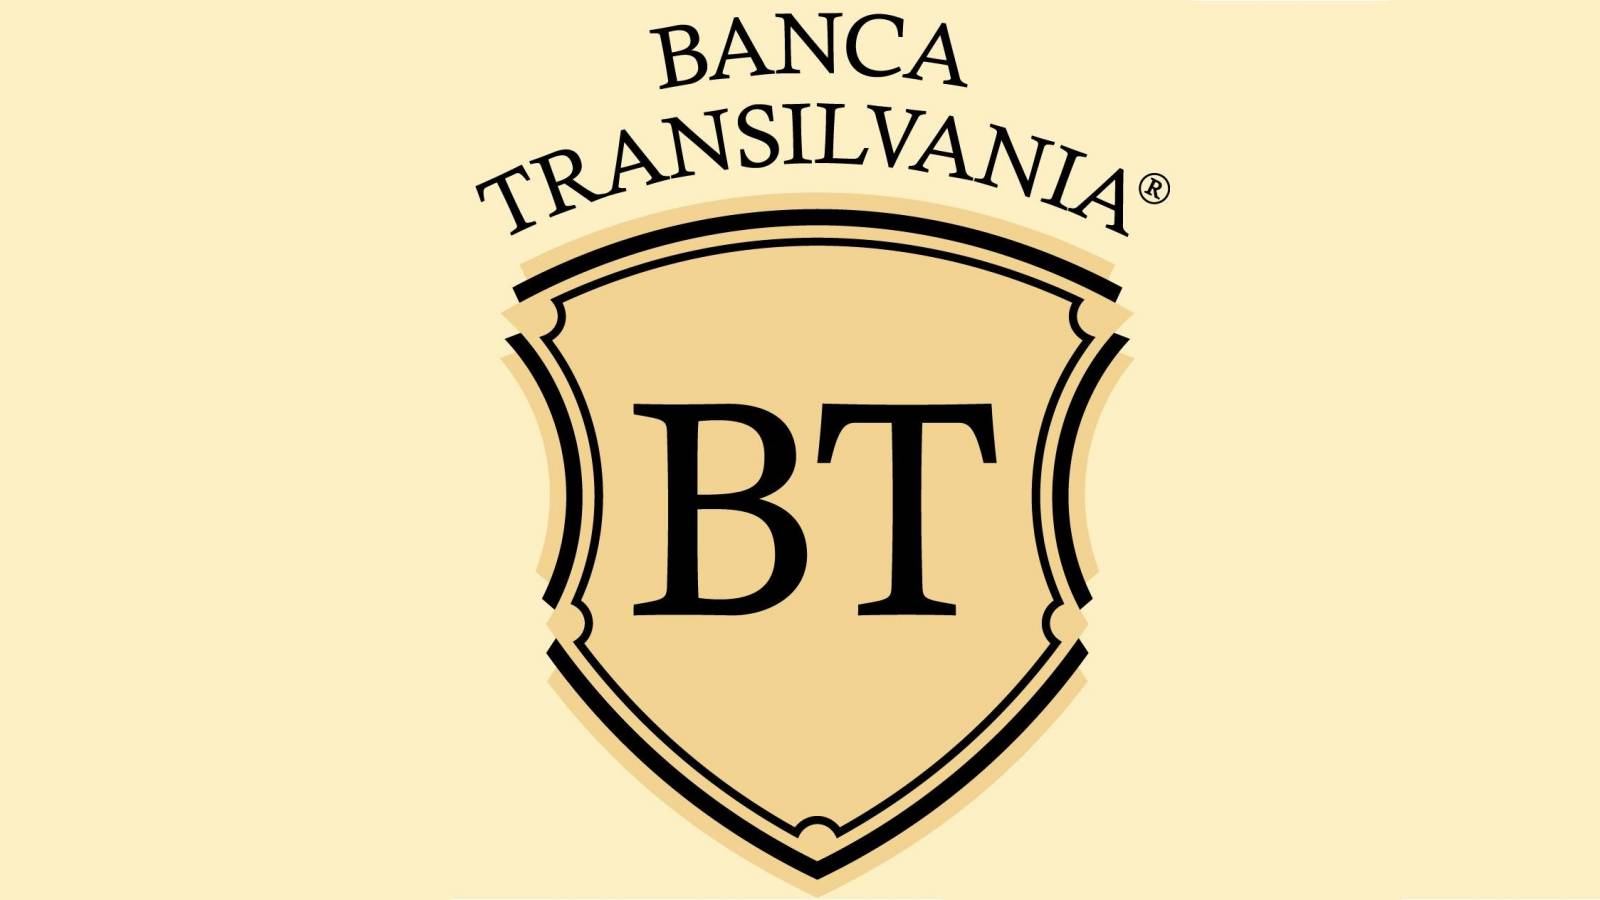 BANCA Transilvania personally